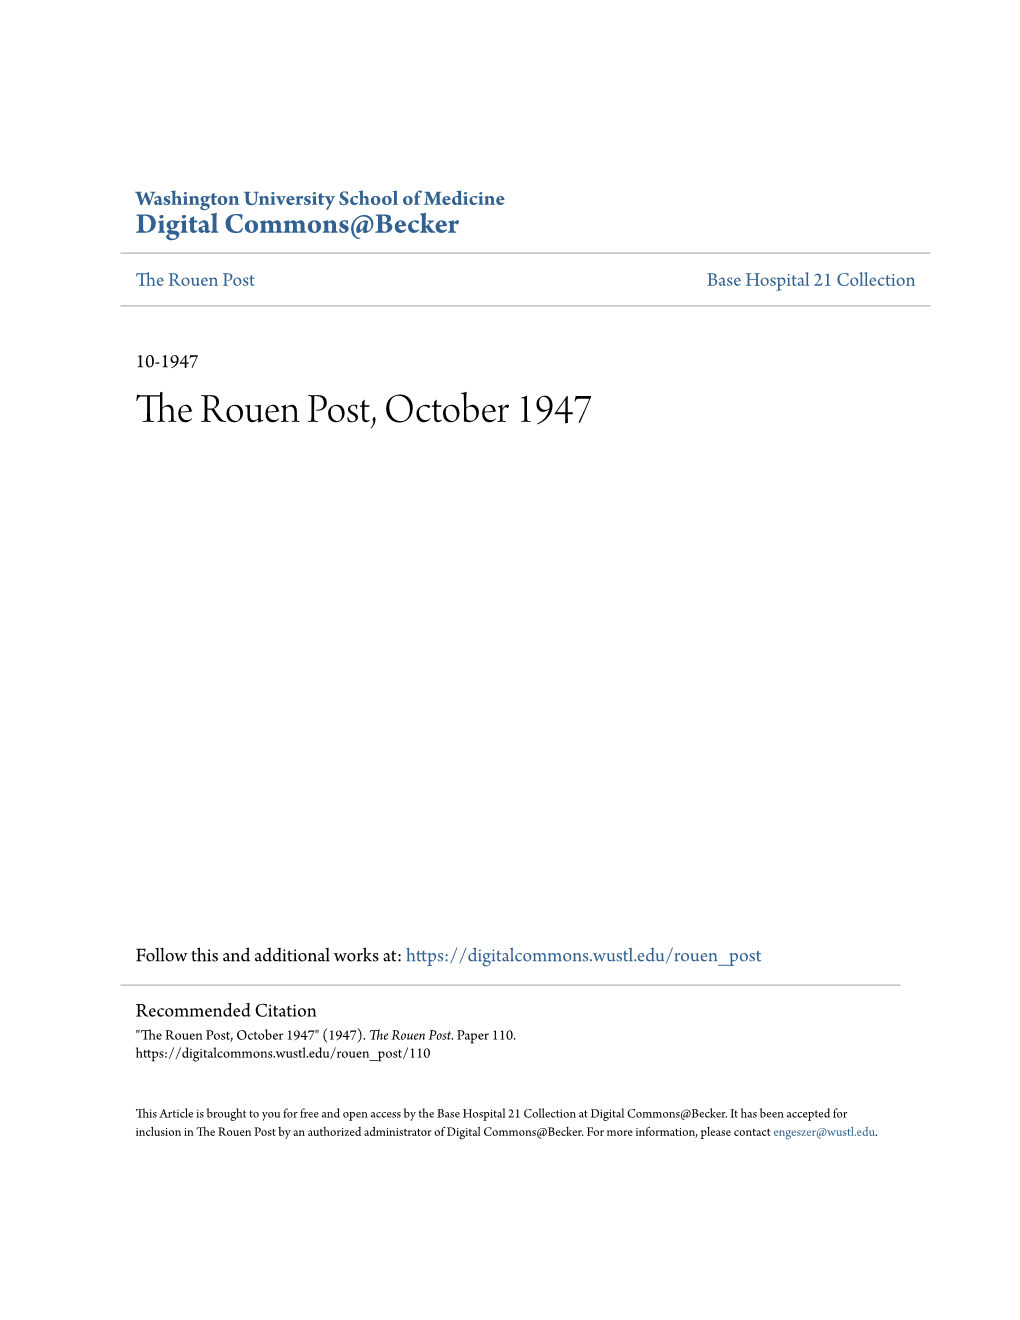 The Rouen Post, October 1947